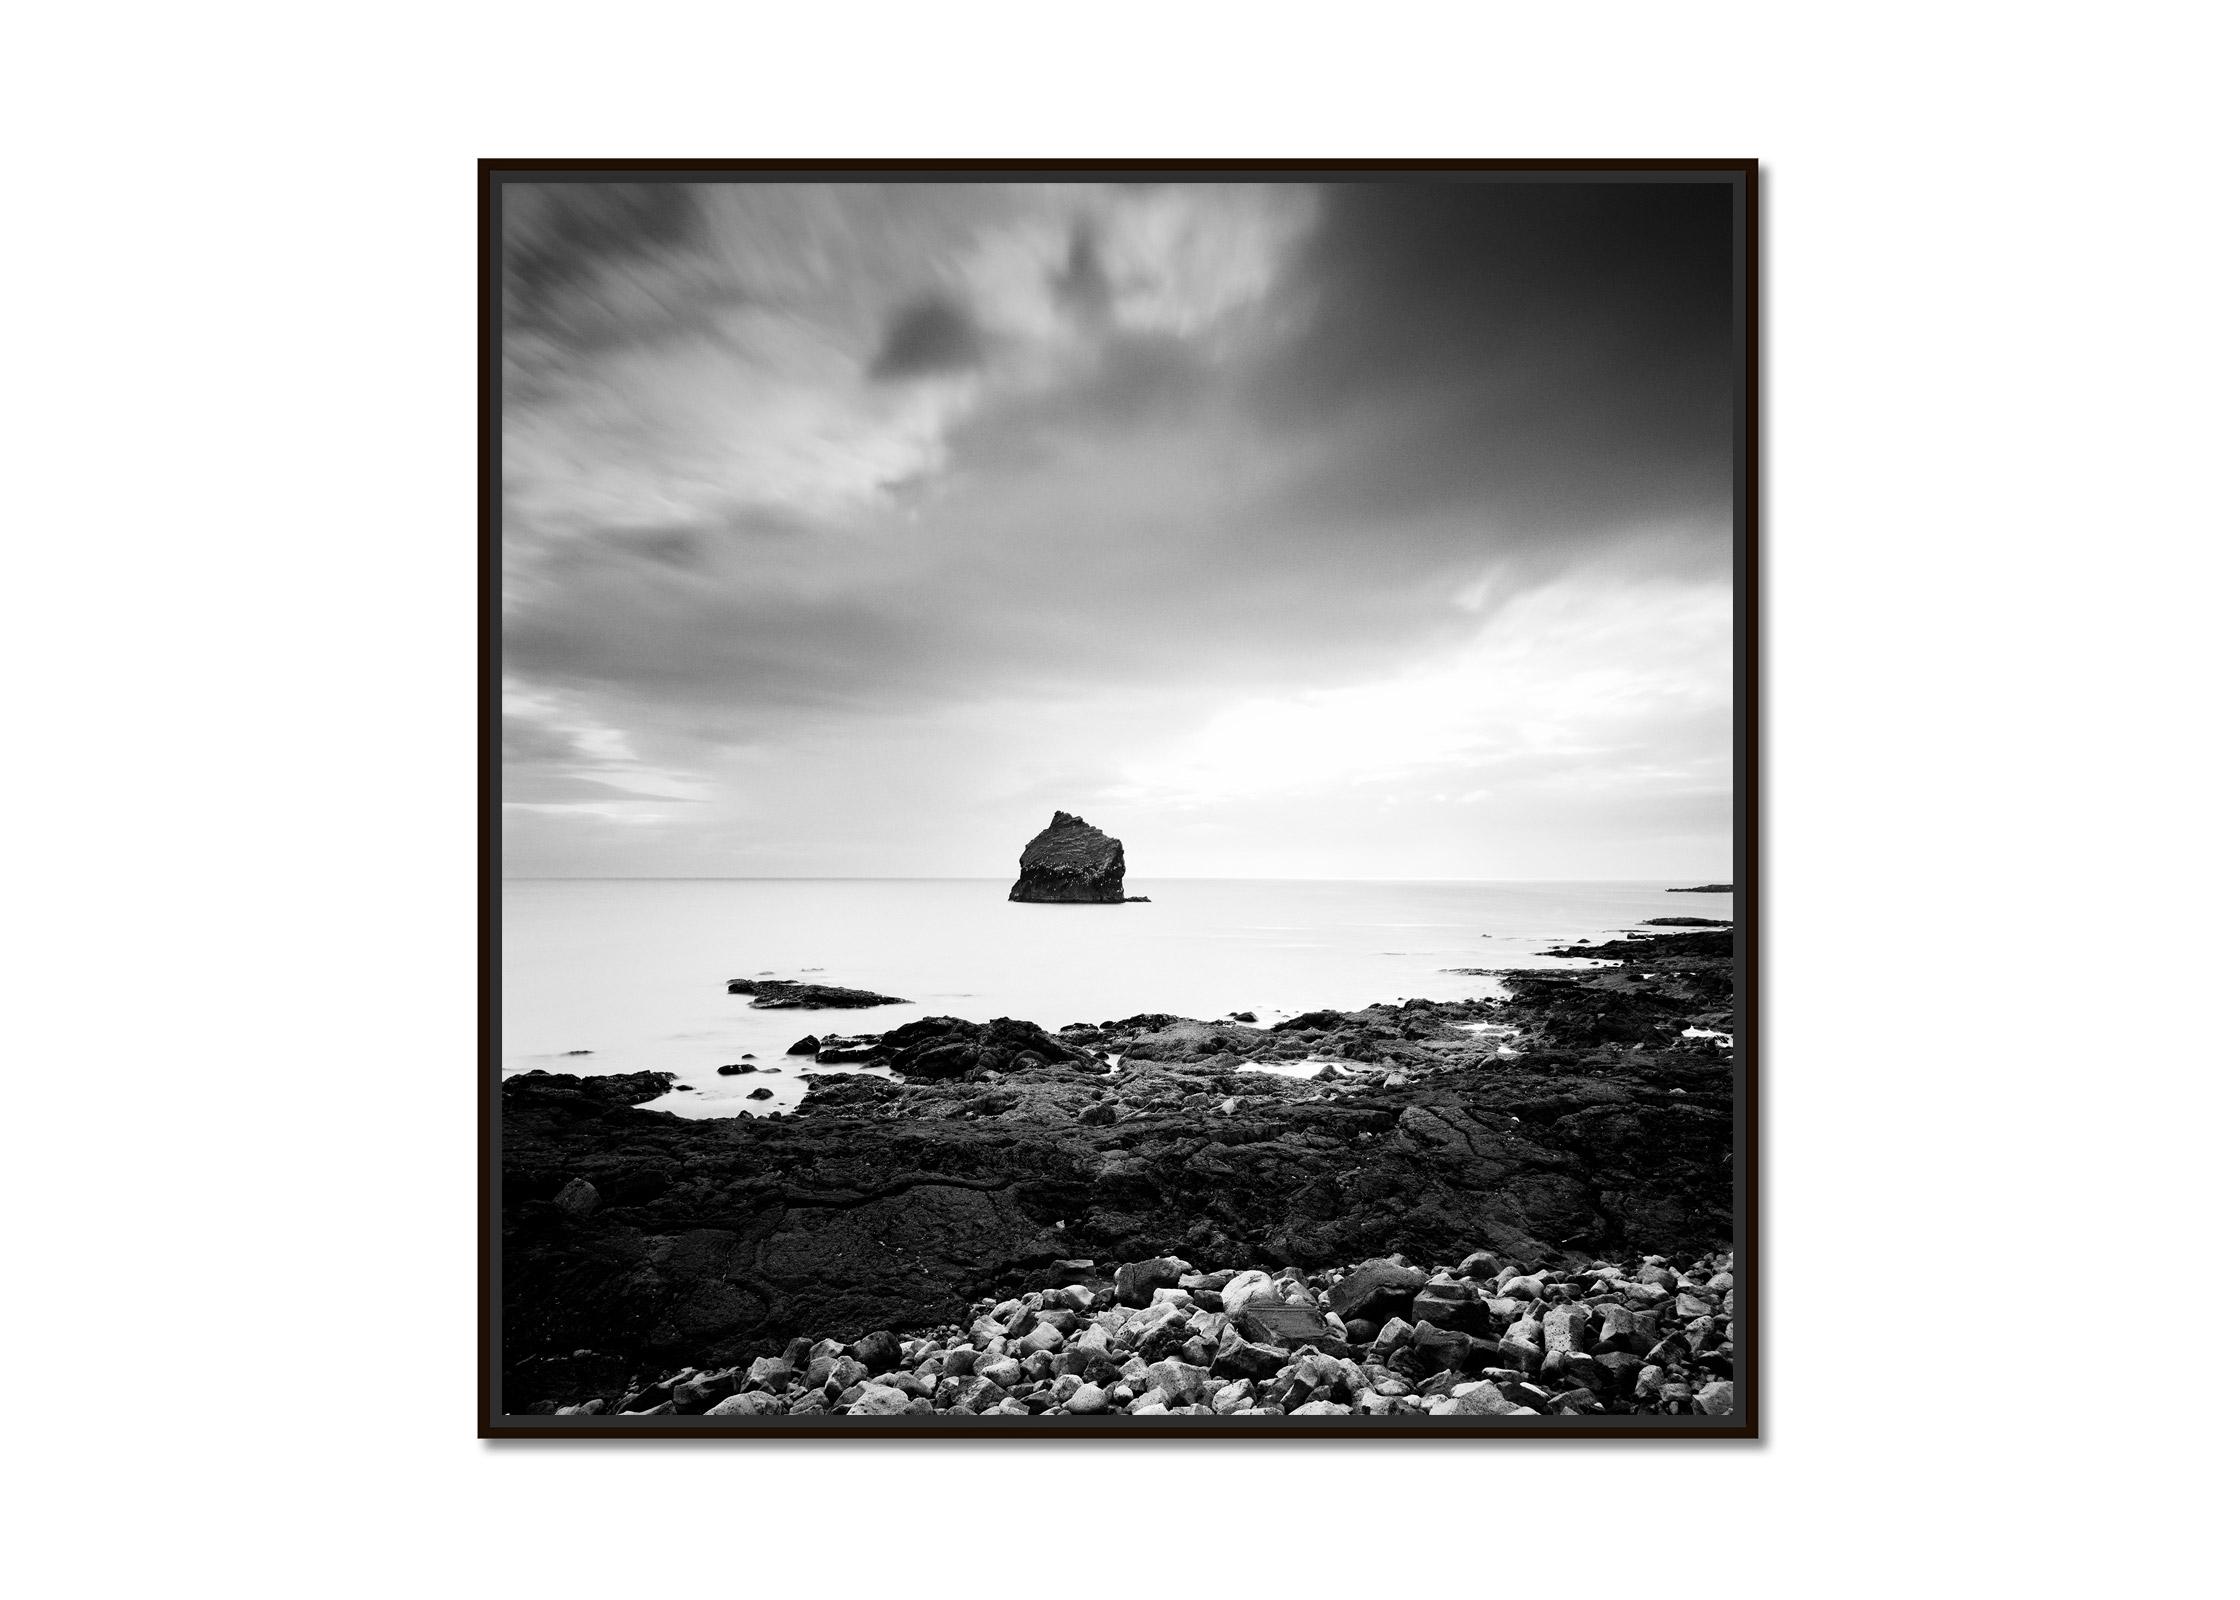 Reykjanes, Black Lava Beach, Iceland, Black and White landscape art photography - Photograph by Gerald Berghammer